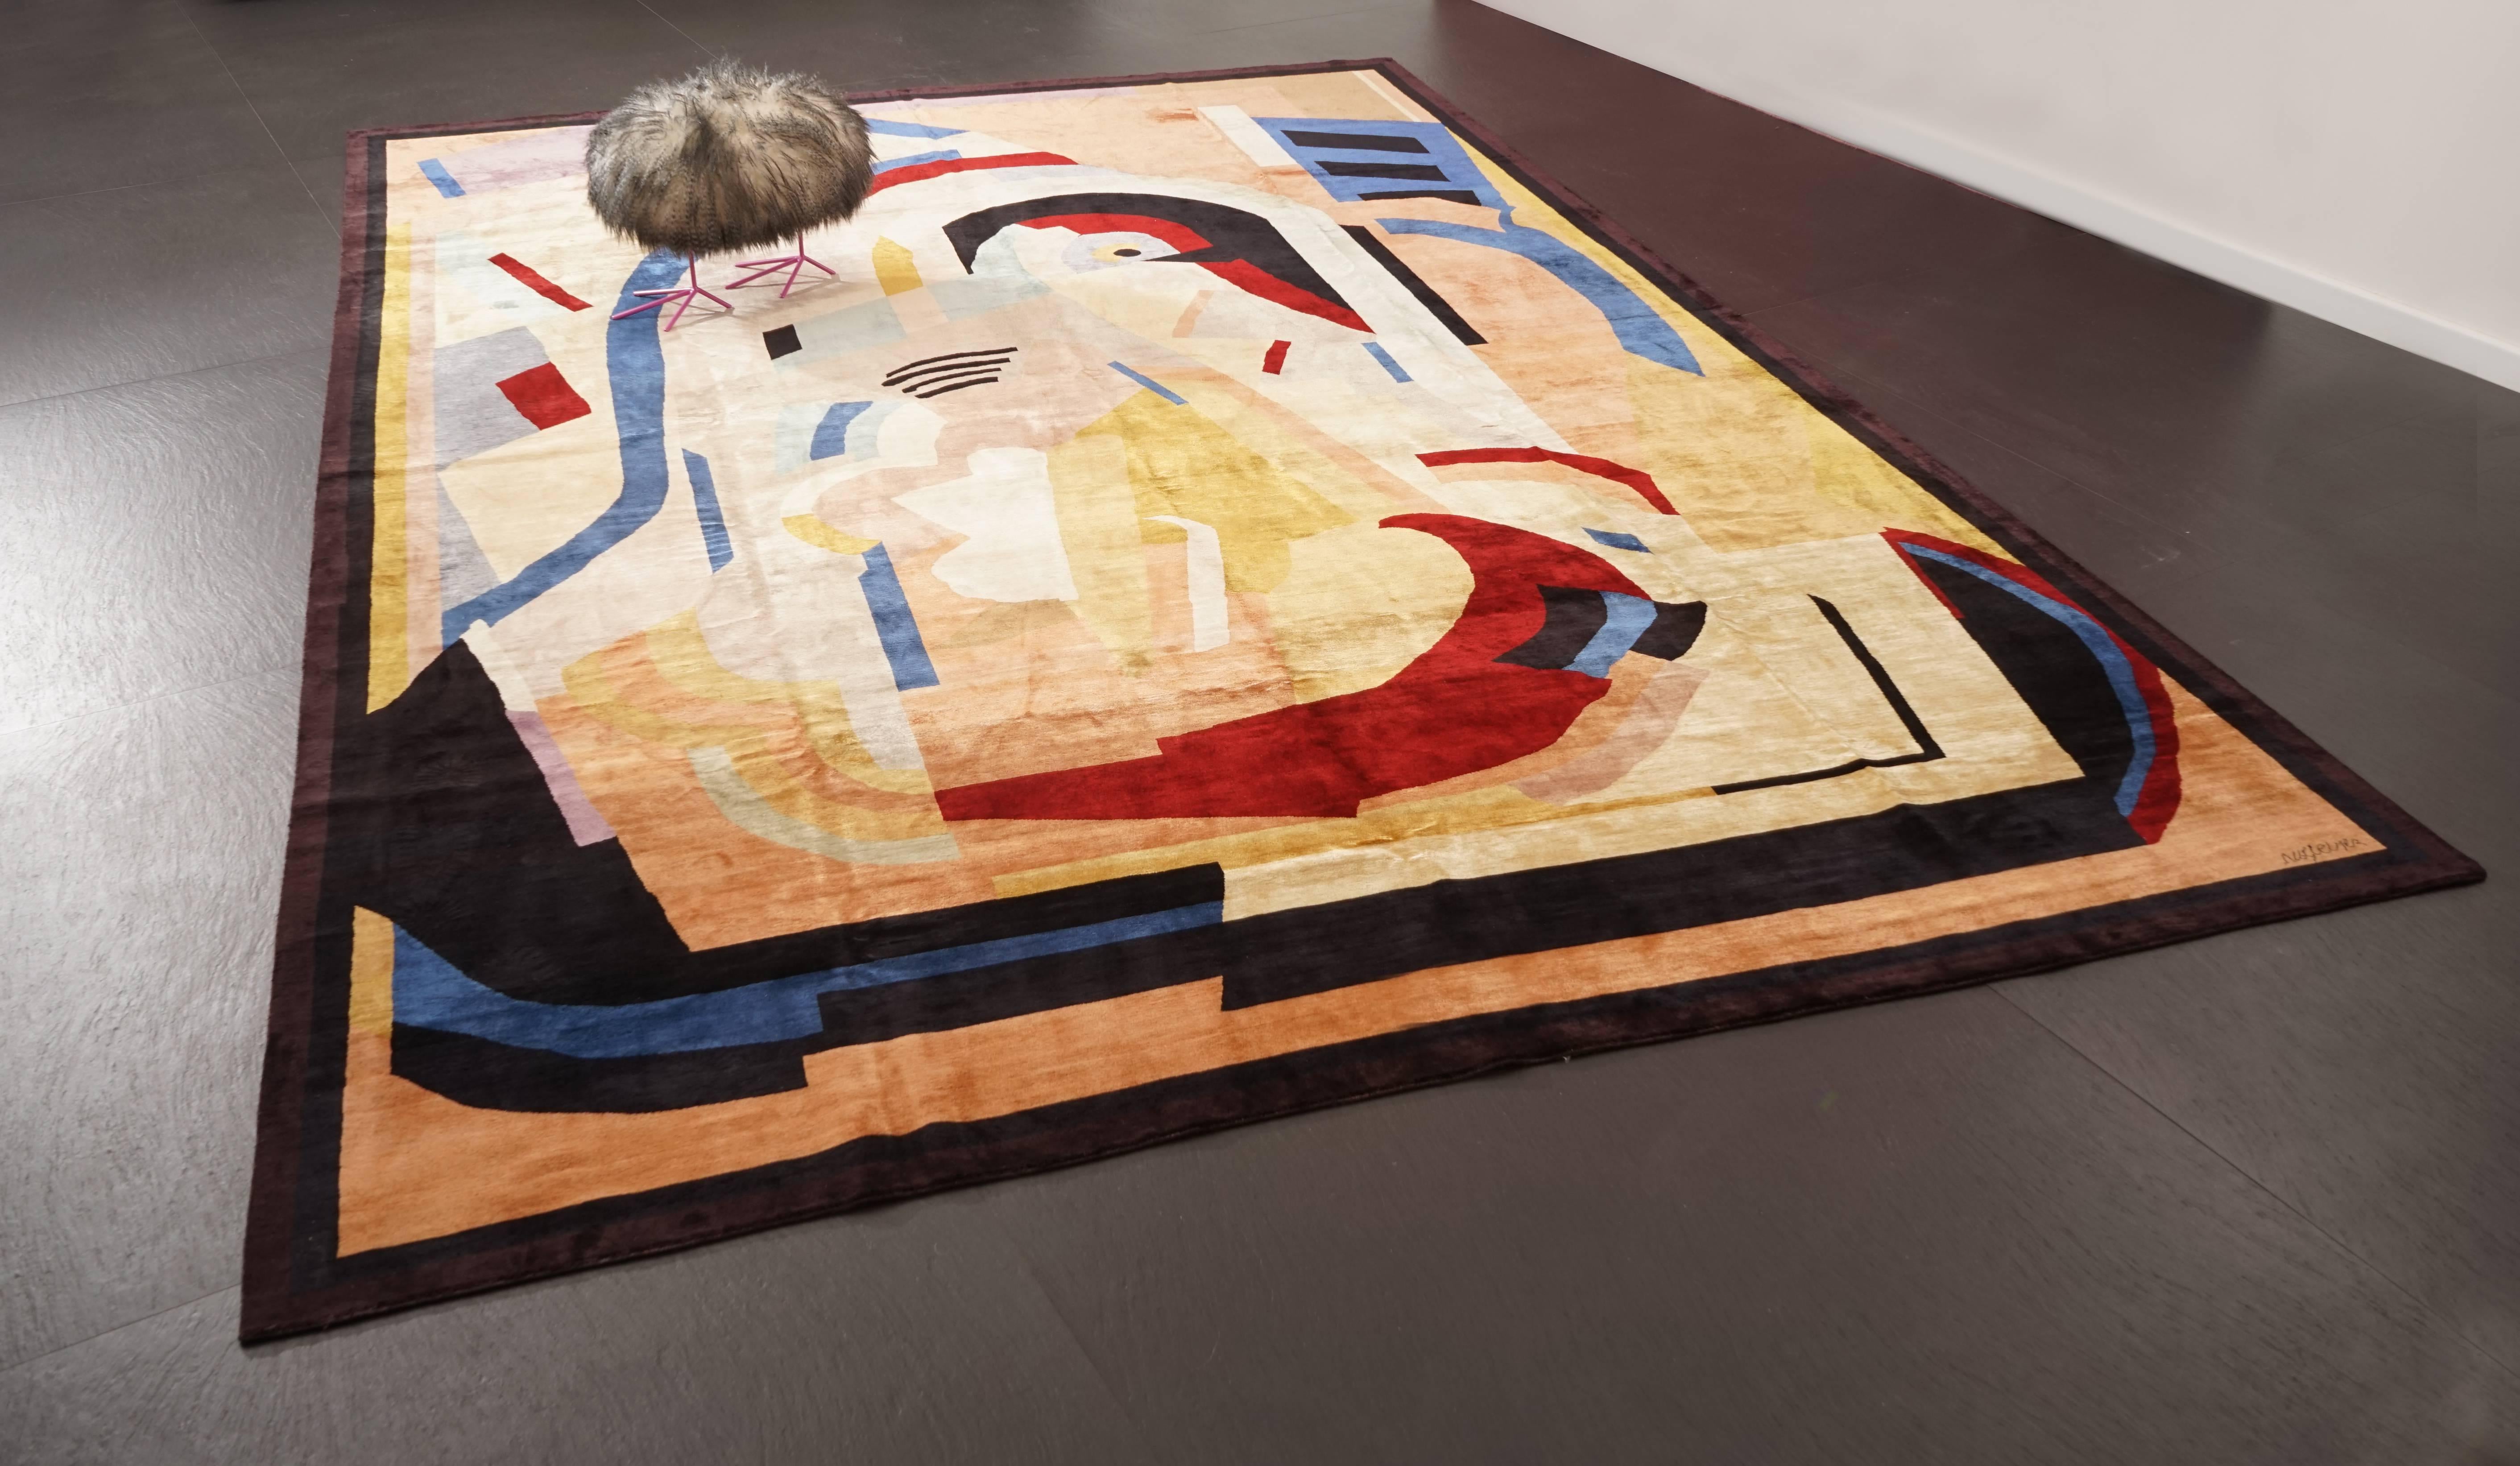 After Albert Gleizes natural silk rug
Unique signed rug
8 knots/cm, high end natural silk quality
Handwoven rug
Dimensions: 300 x 200 cm
Signed Albert Gleizes

After Albert Gleizes (1881–1953).

Albert Gleizes was a French artist,